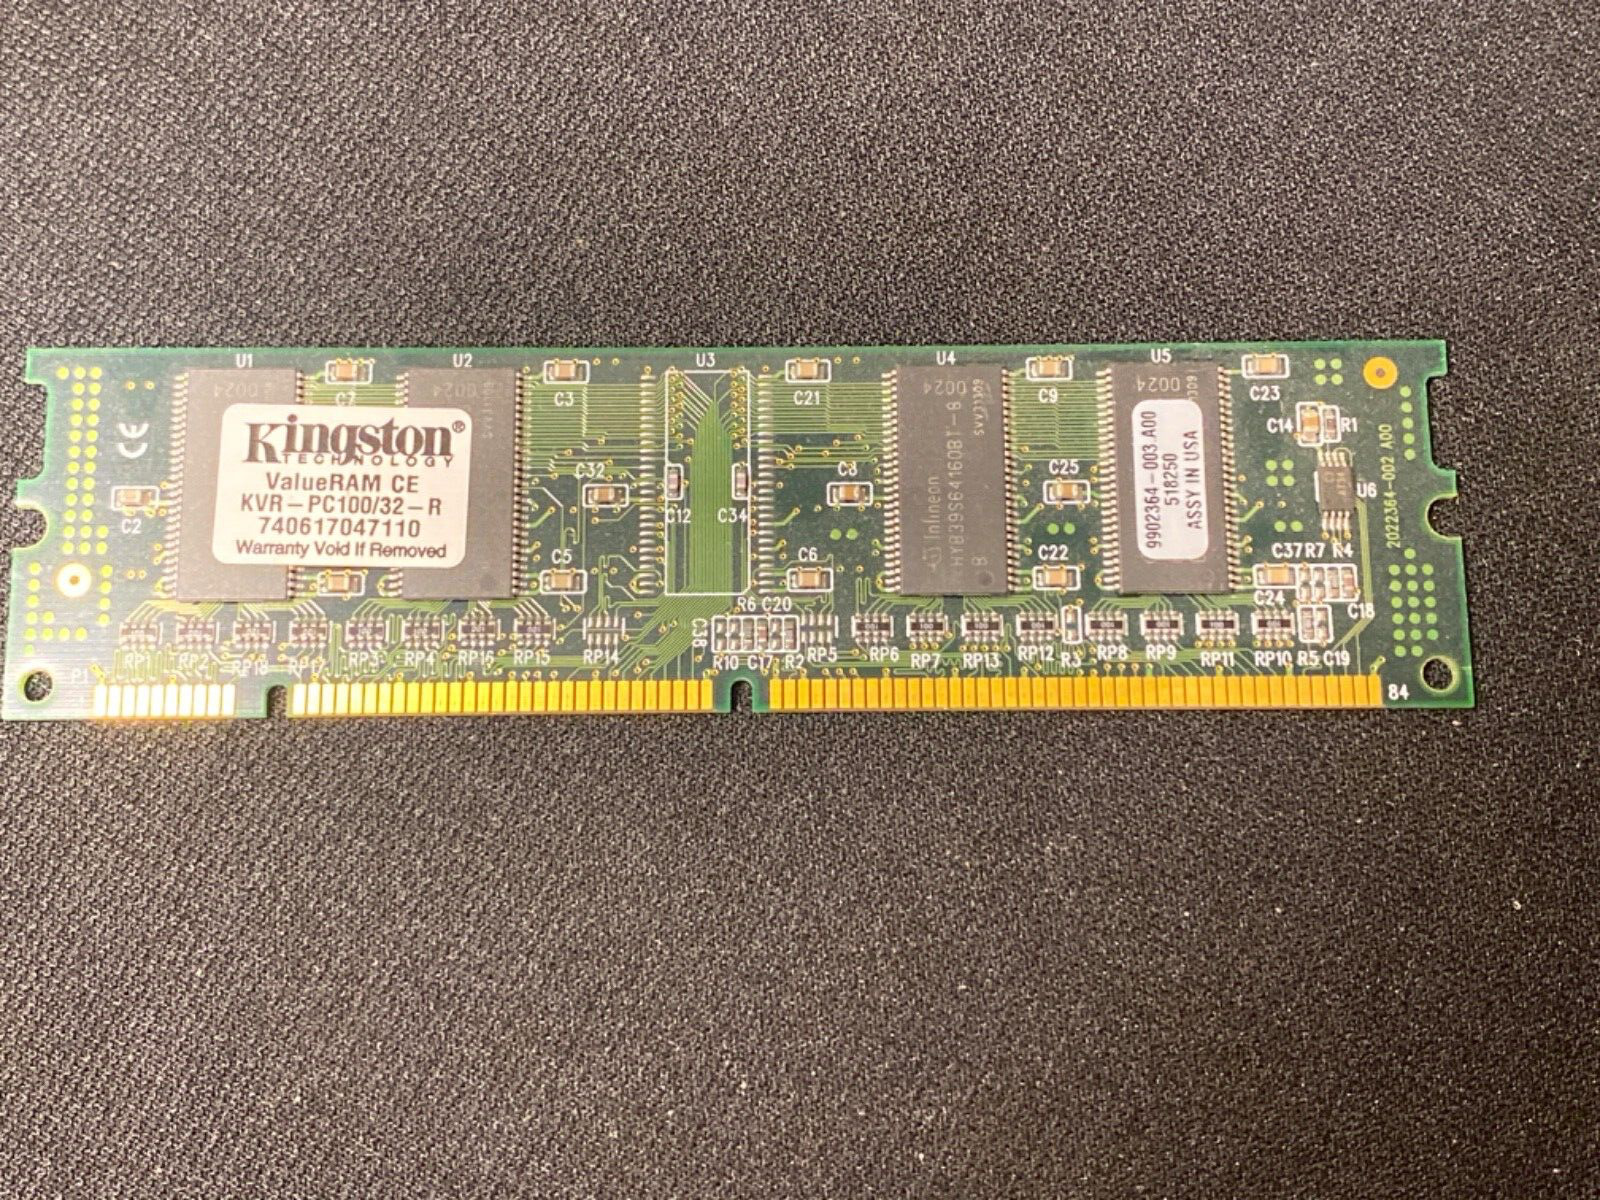 Kingston Technology 32mb ValueRAM CE Memory Module KVR PC100/32-R